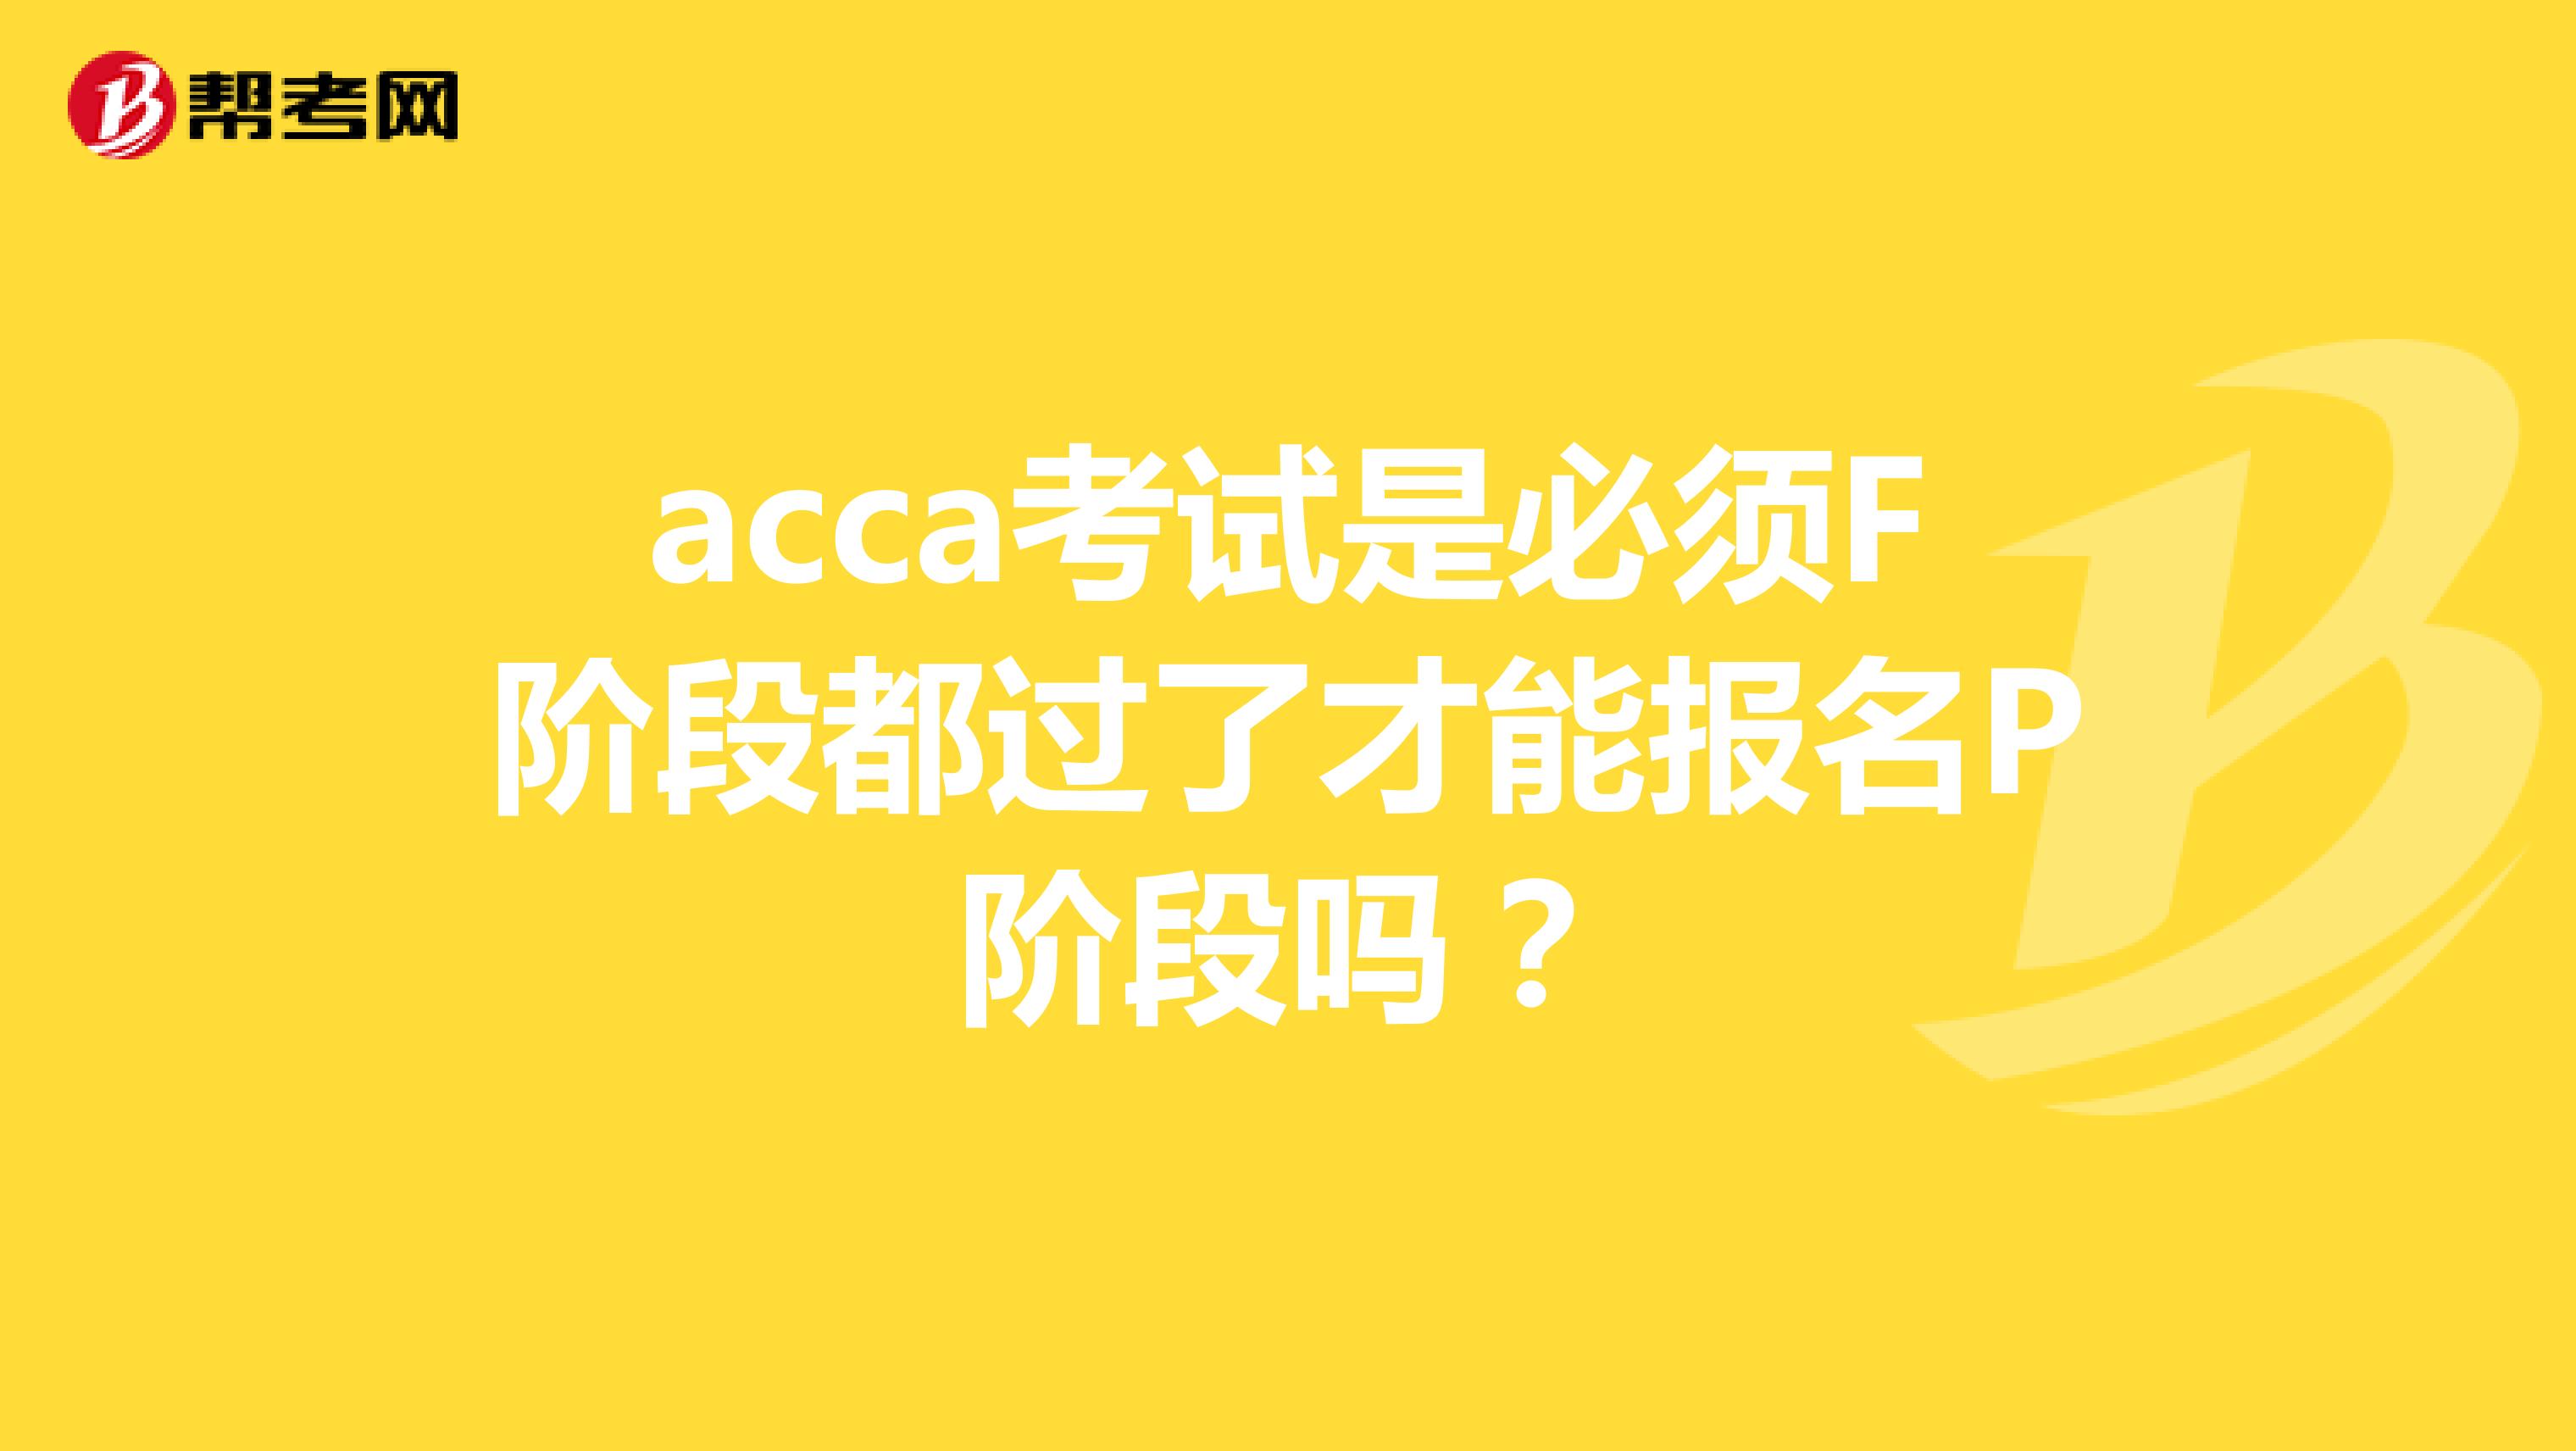 acca考试是必须F阶段都过了才能报名P阶段吗？